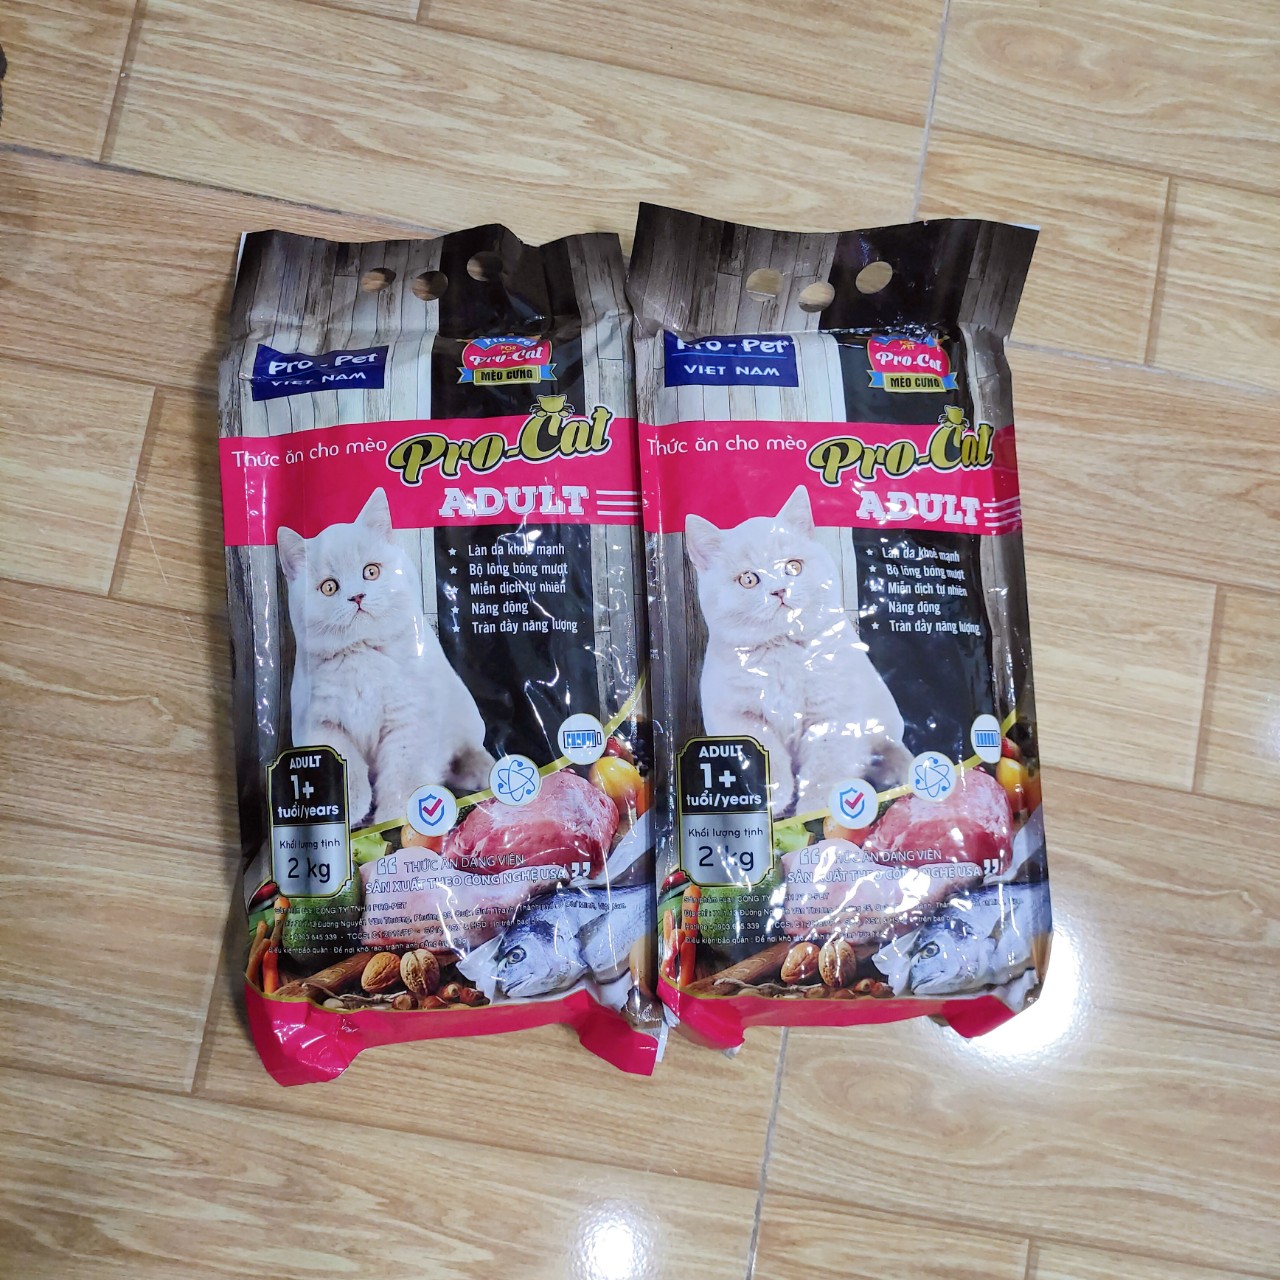 Combo 2 Gói Thức Ăn Hạt Cho Mèo Lớn PRO-CAT Adult 2kg Pro-Pet Việt Nam